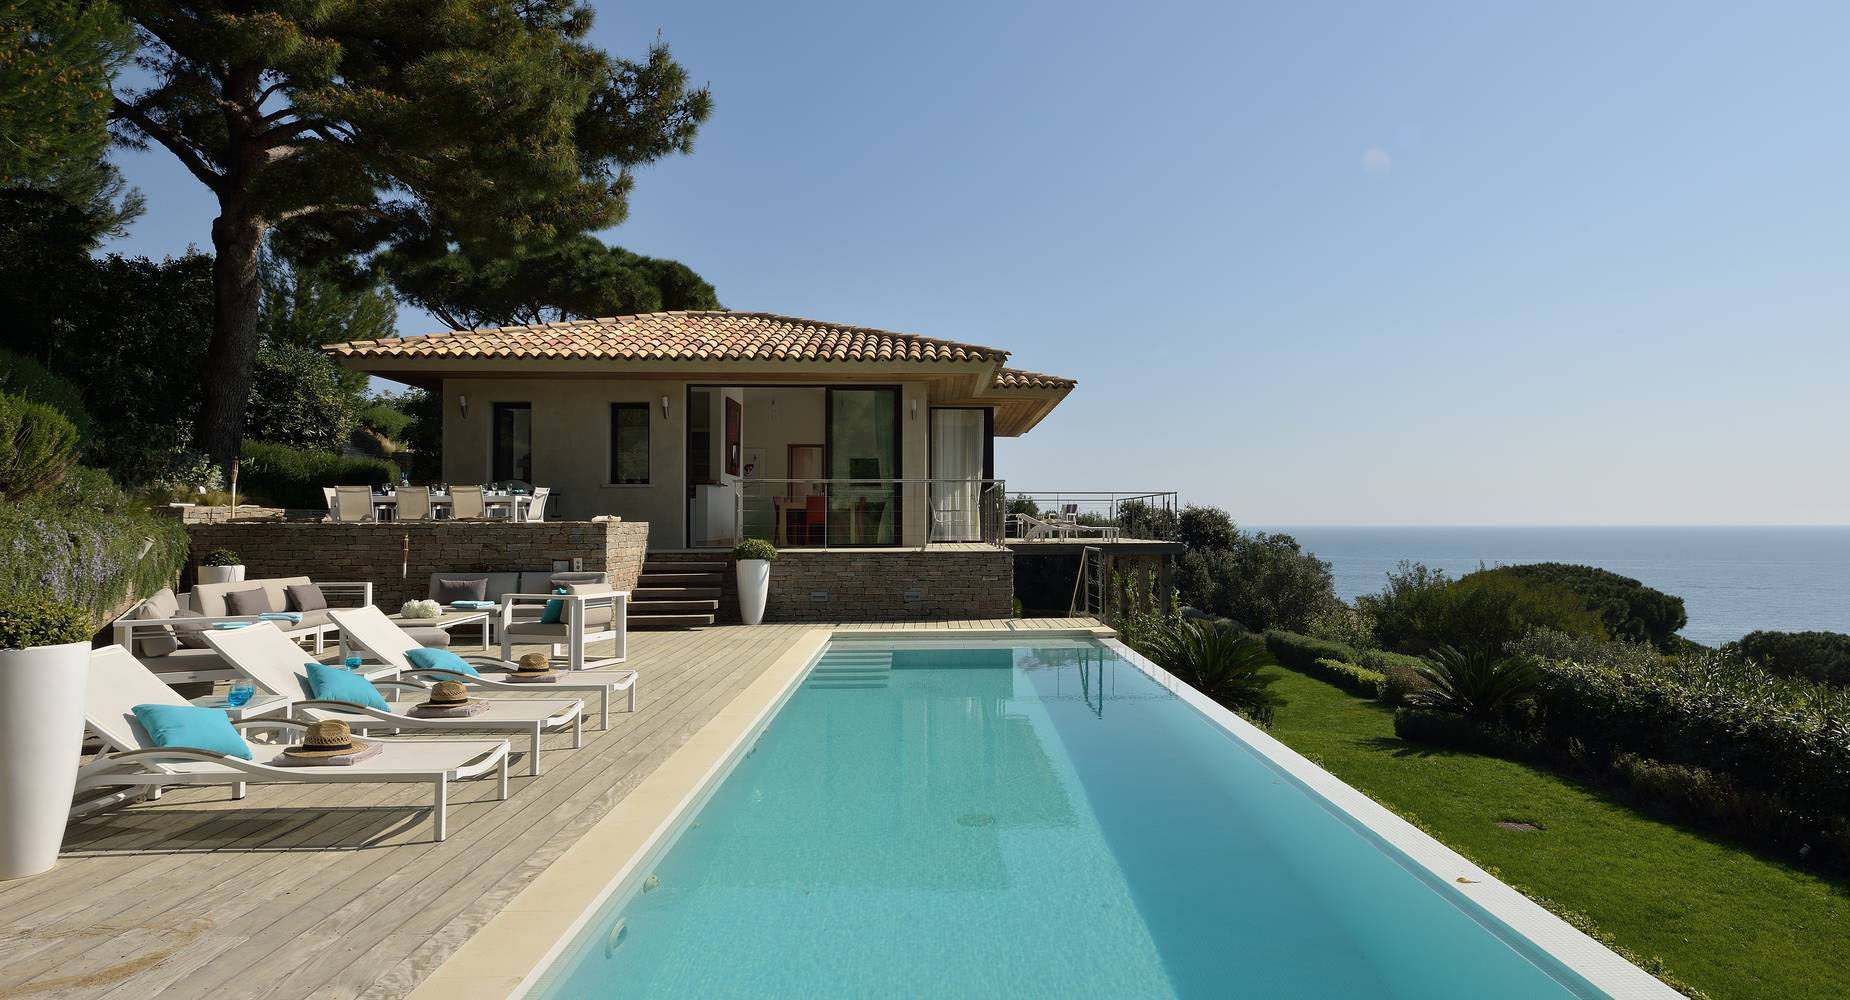 Modern Mediterranean Home with Ocean View